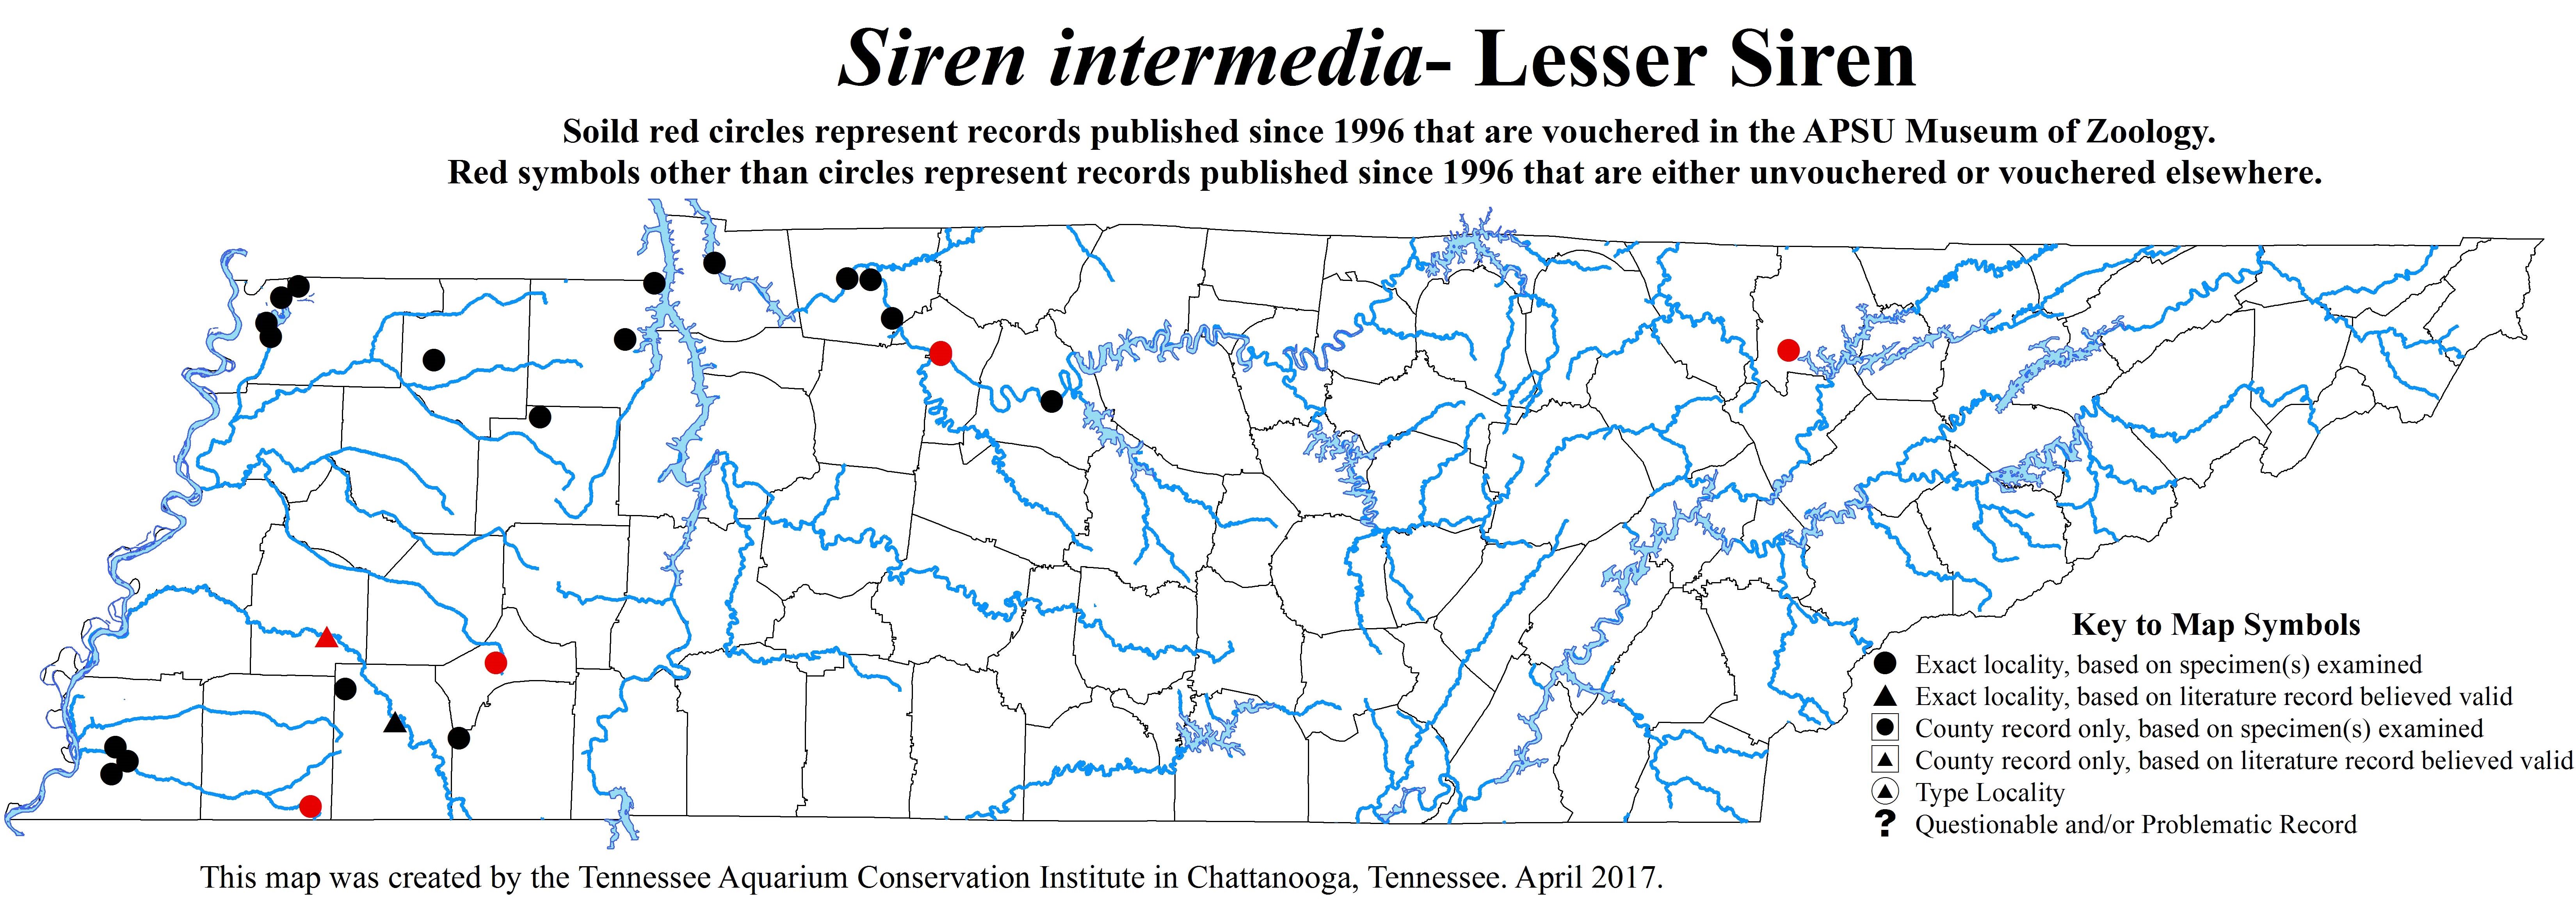 New Distribution Map - Siren intermedia Barnes - Lesser Siren